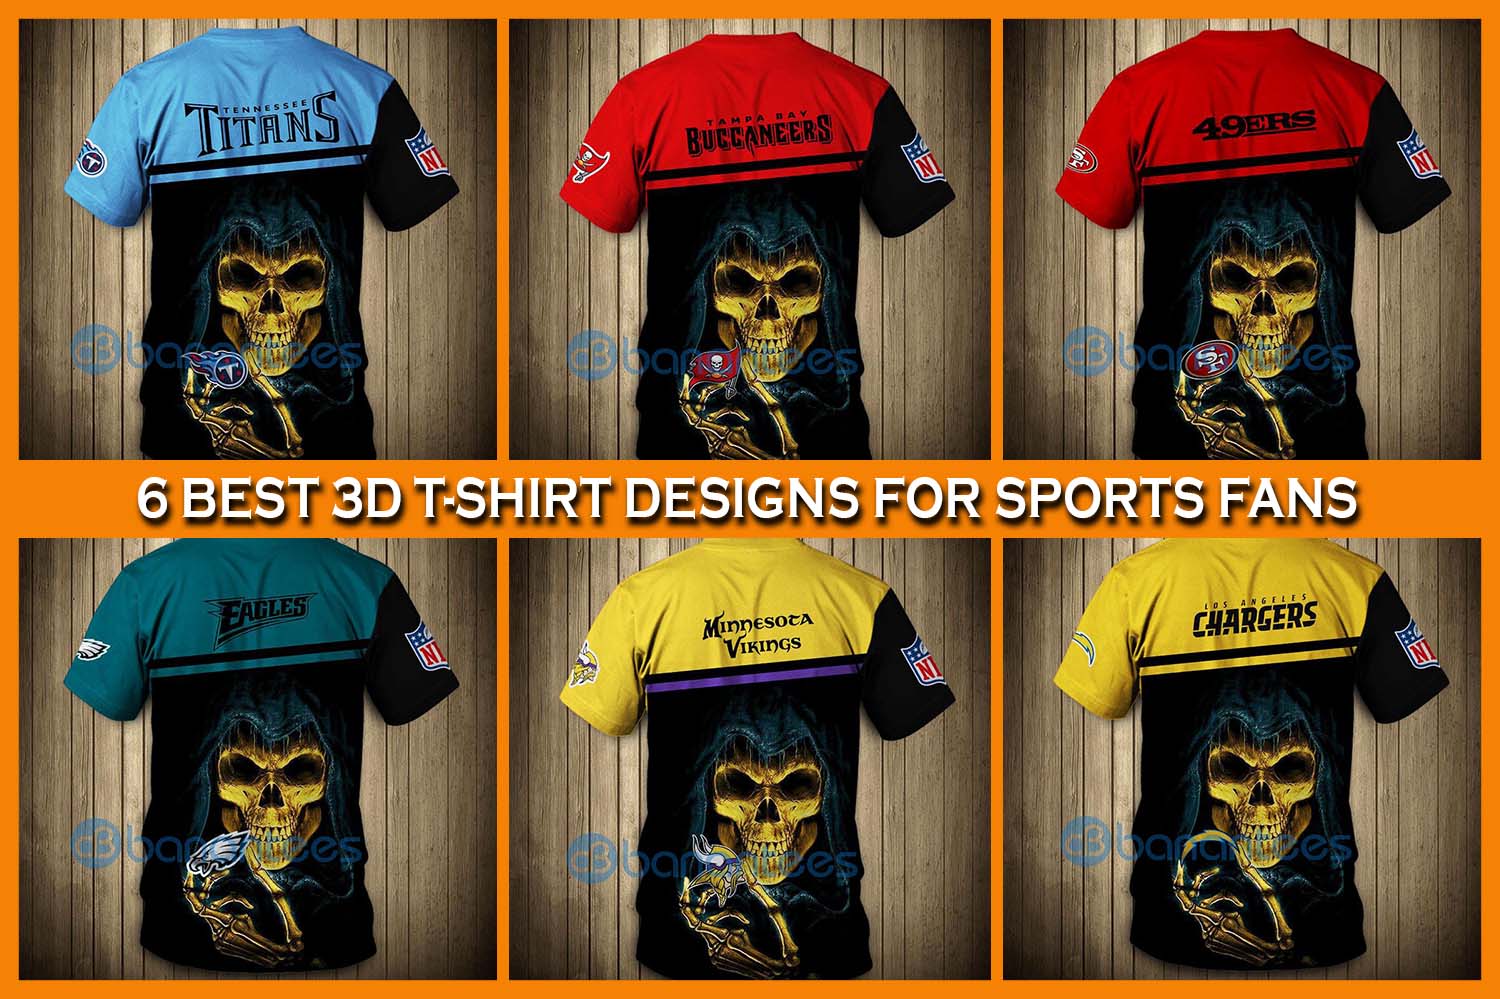 6 Best 3D T-Shirt Designs For Sports Fans